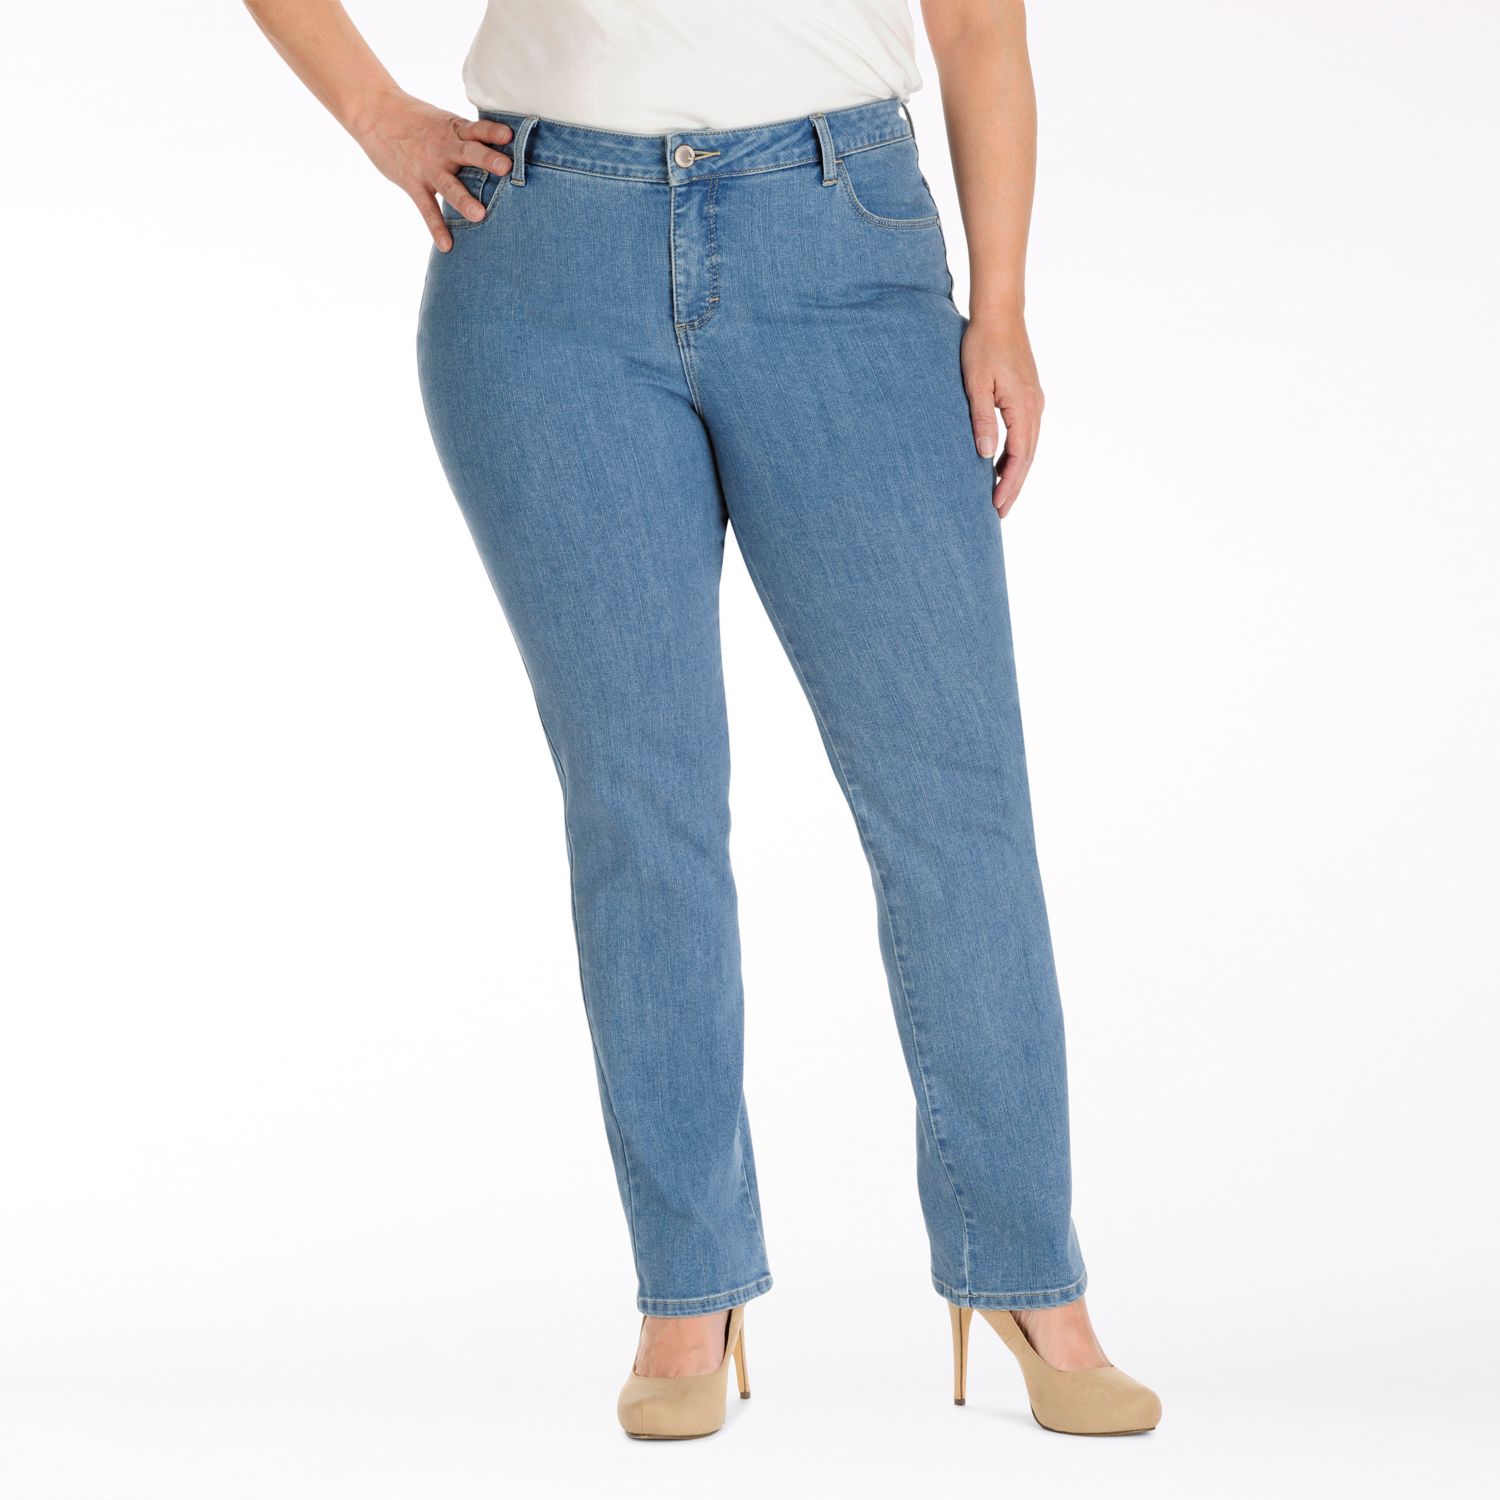 Kohl's Lee Jeans Petite Flash Sales, 56% OFF 